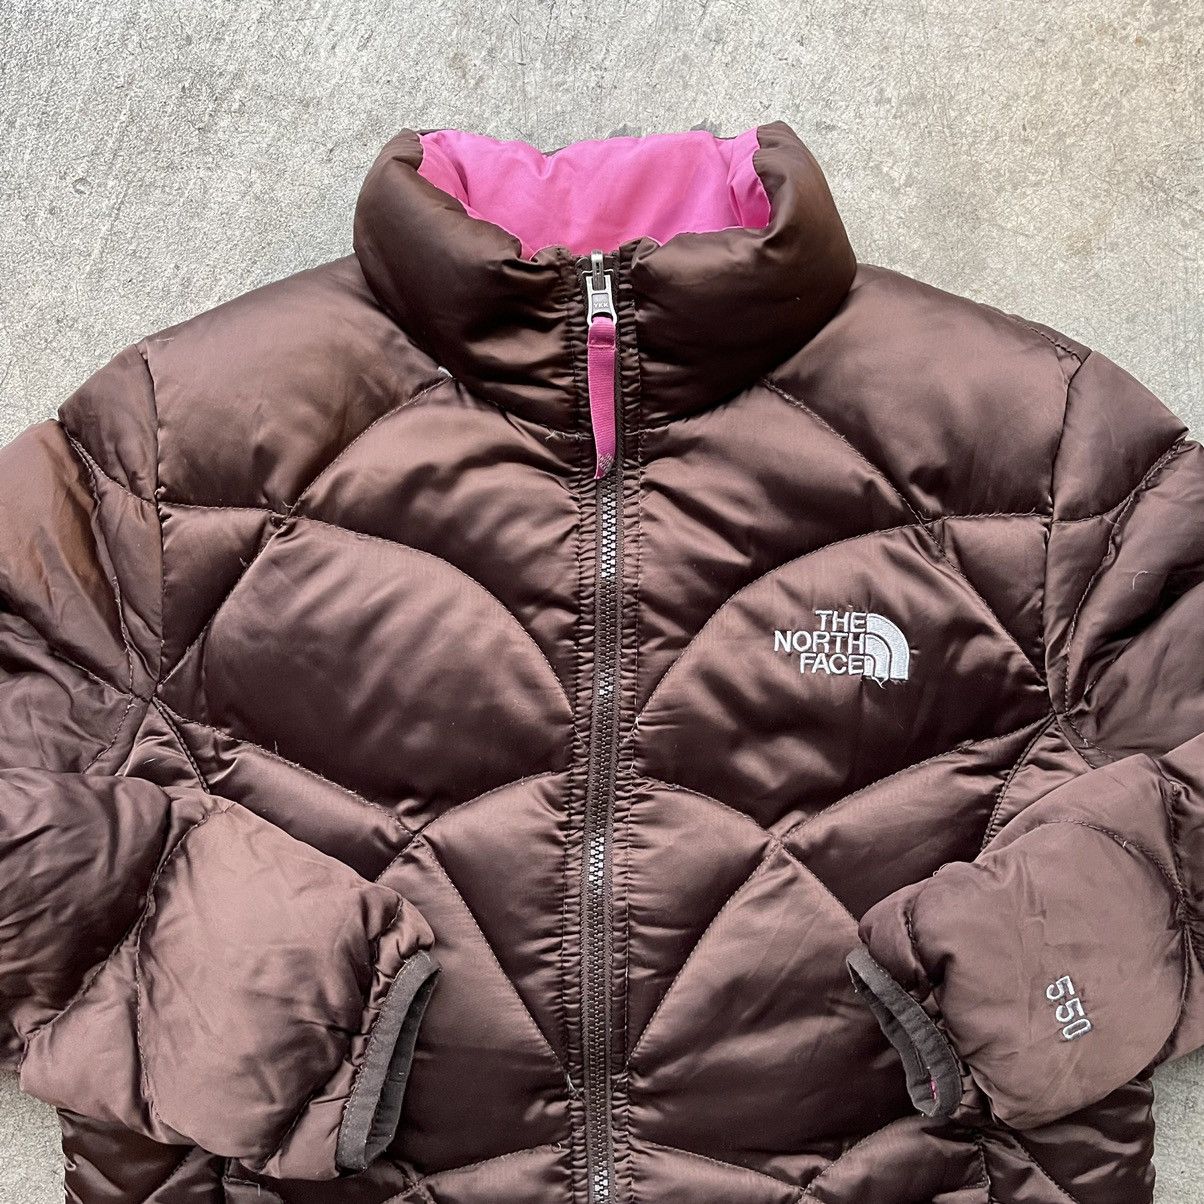 Vintage Brown North Face Puffer Jacket Nuptse 550 S Size US S / EU 44-46 / 1 - 3 Thumbnail